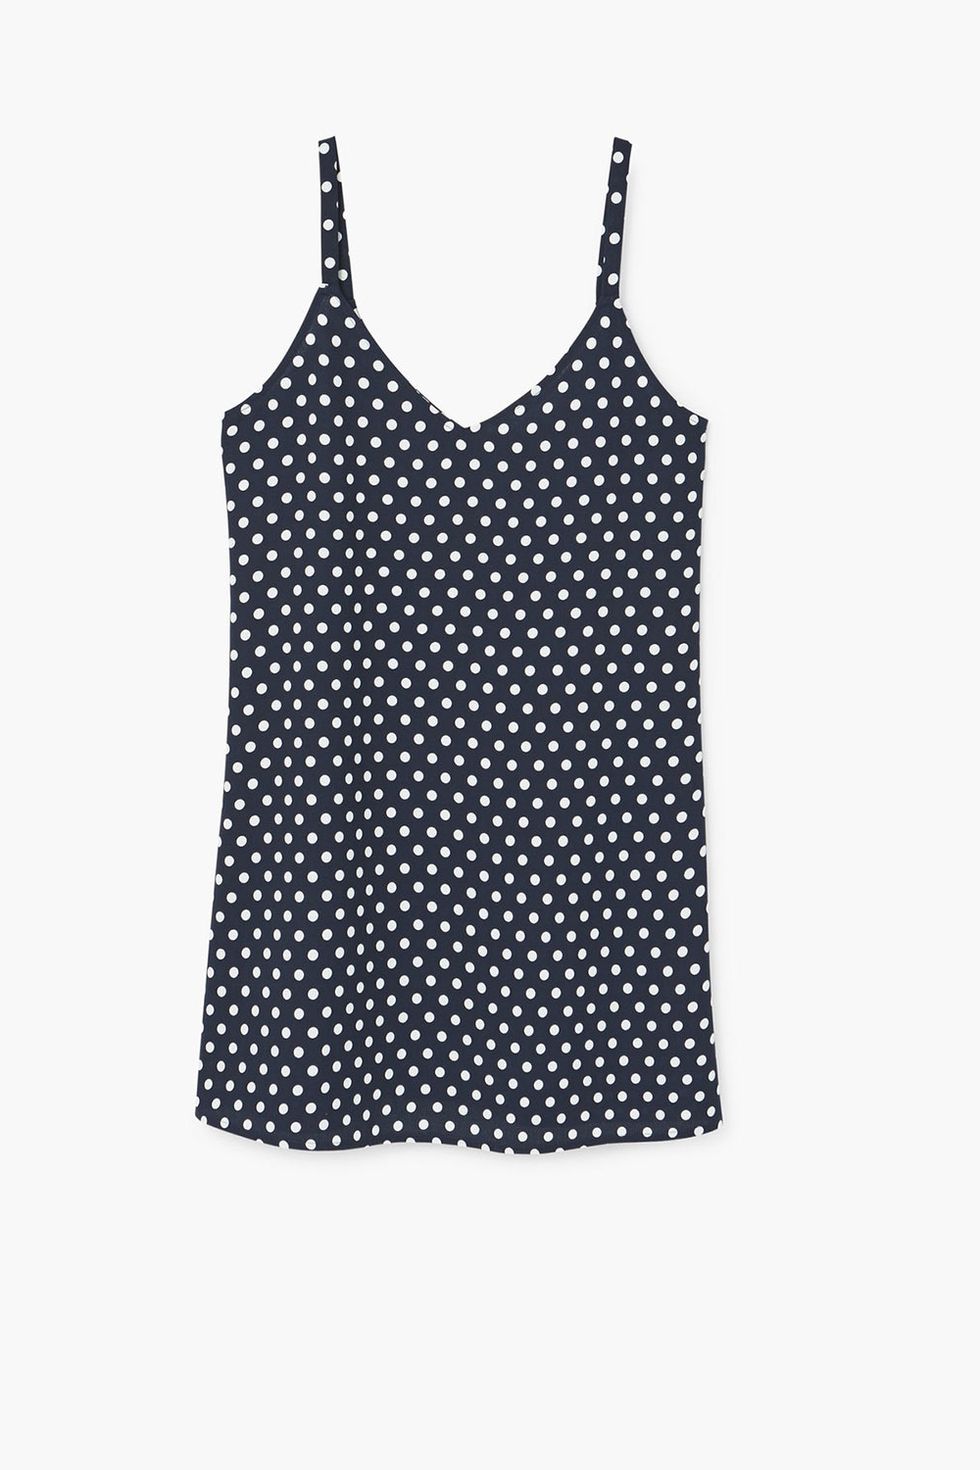 Product, Pattern, White, Style, Sleeveless shirt, Black, Grey, Polka dot, Active tank, One-piece garment, 